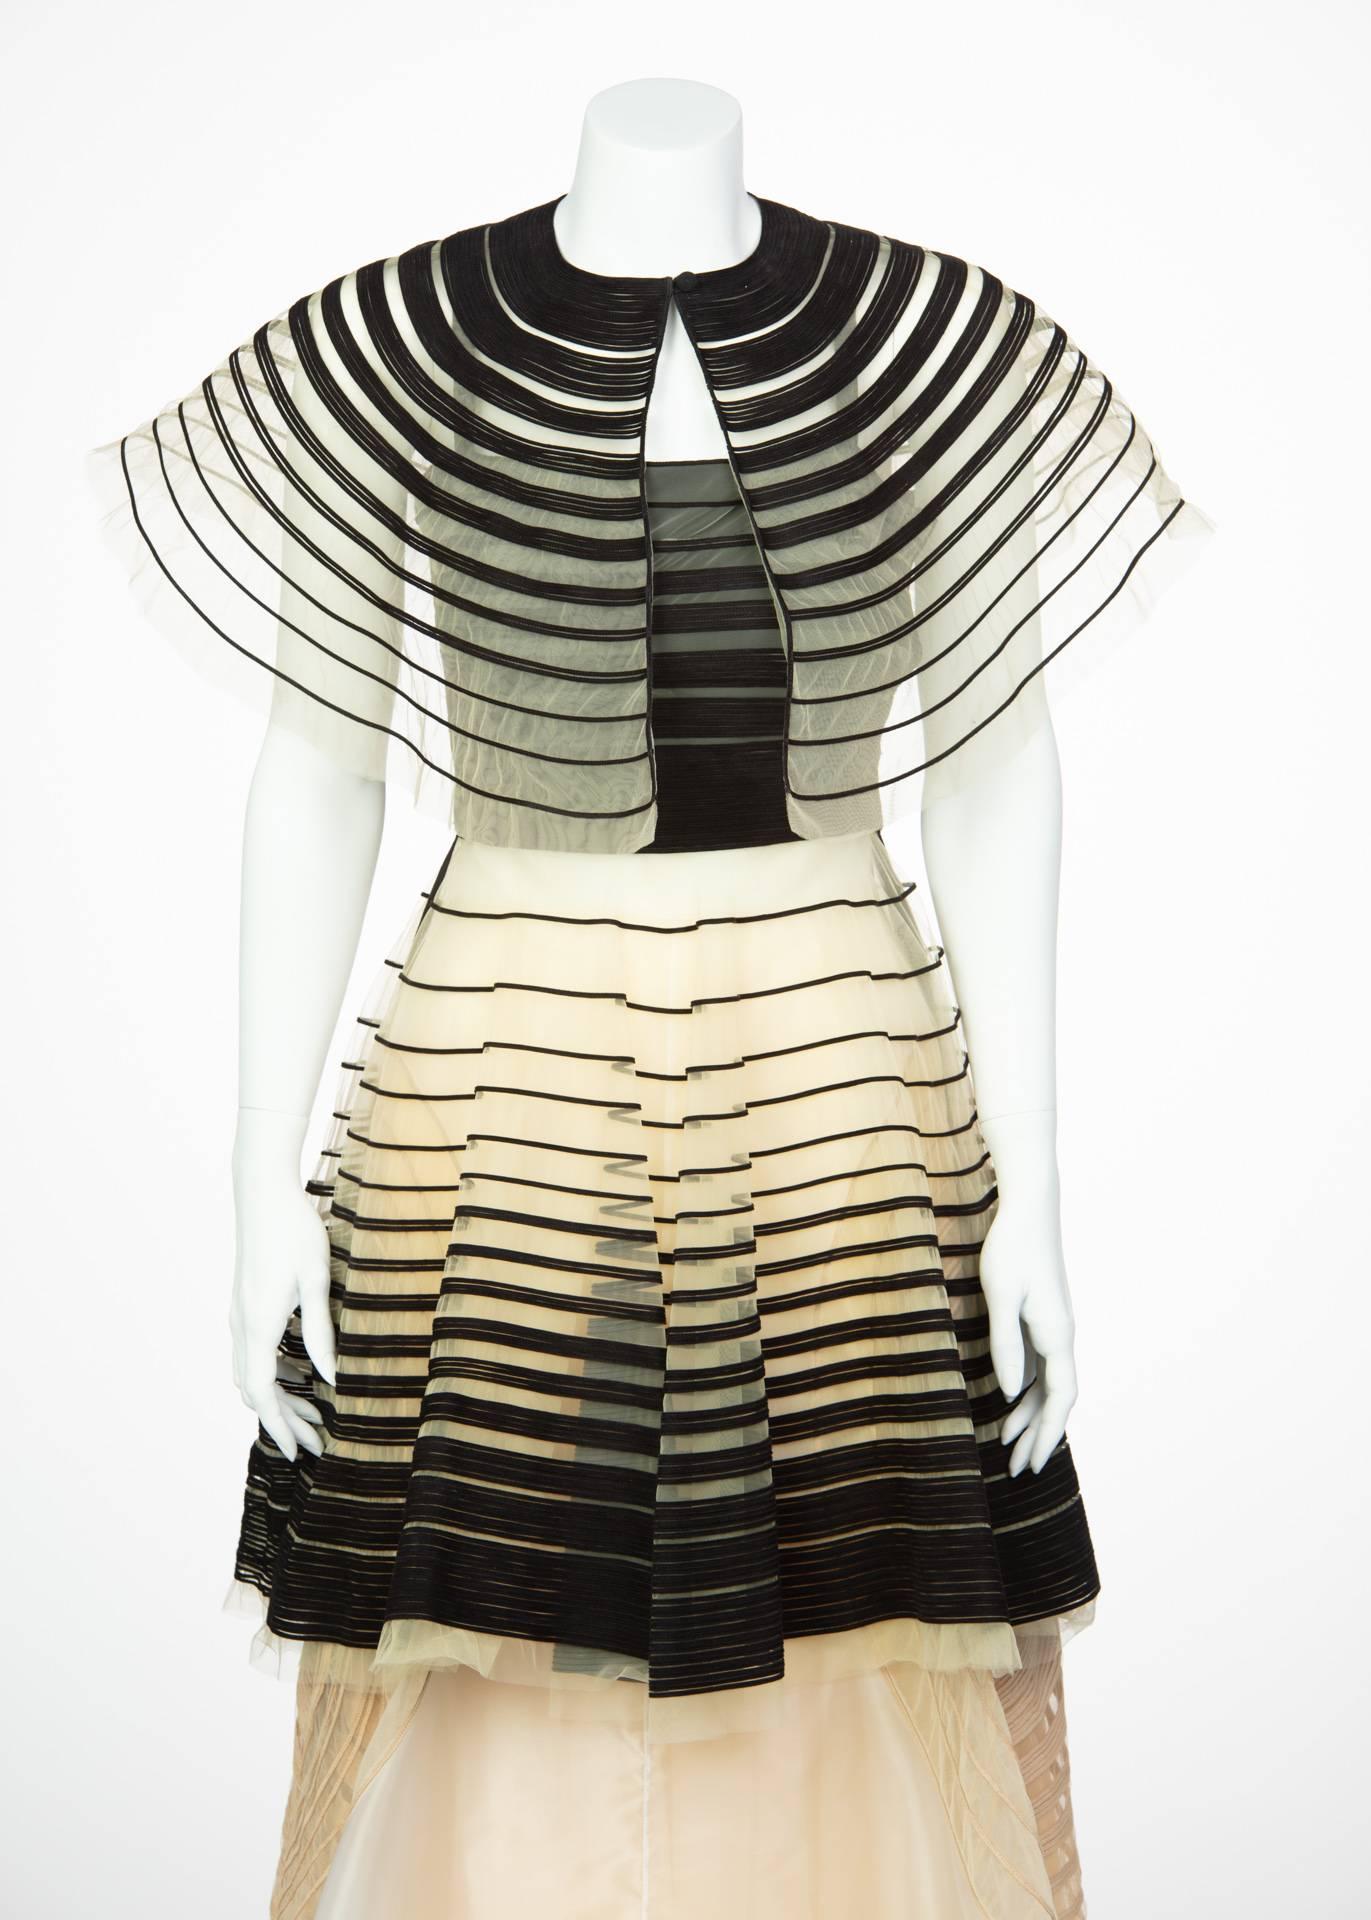 Fendi Karl Lagerfeld S/S 2008 Runway Black Cut Out Suede Dress Cape Skirt Set en vente 5